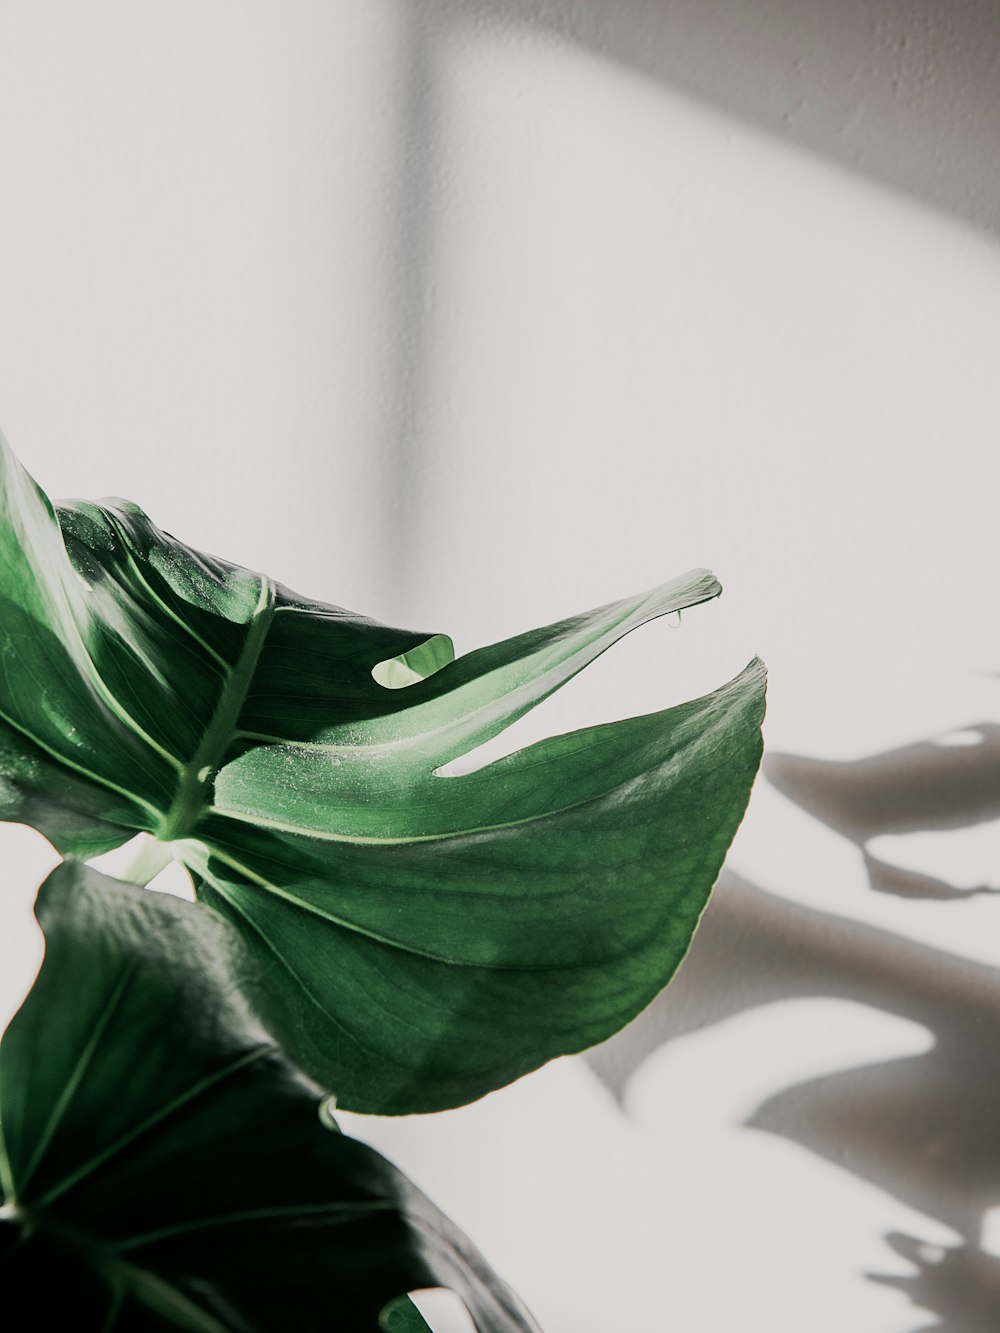 green leaf in white background photo – Free Grey Image on Unsplash